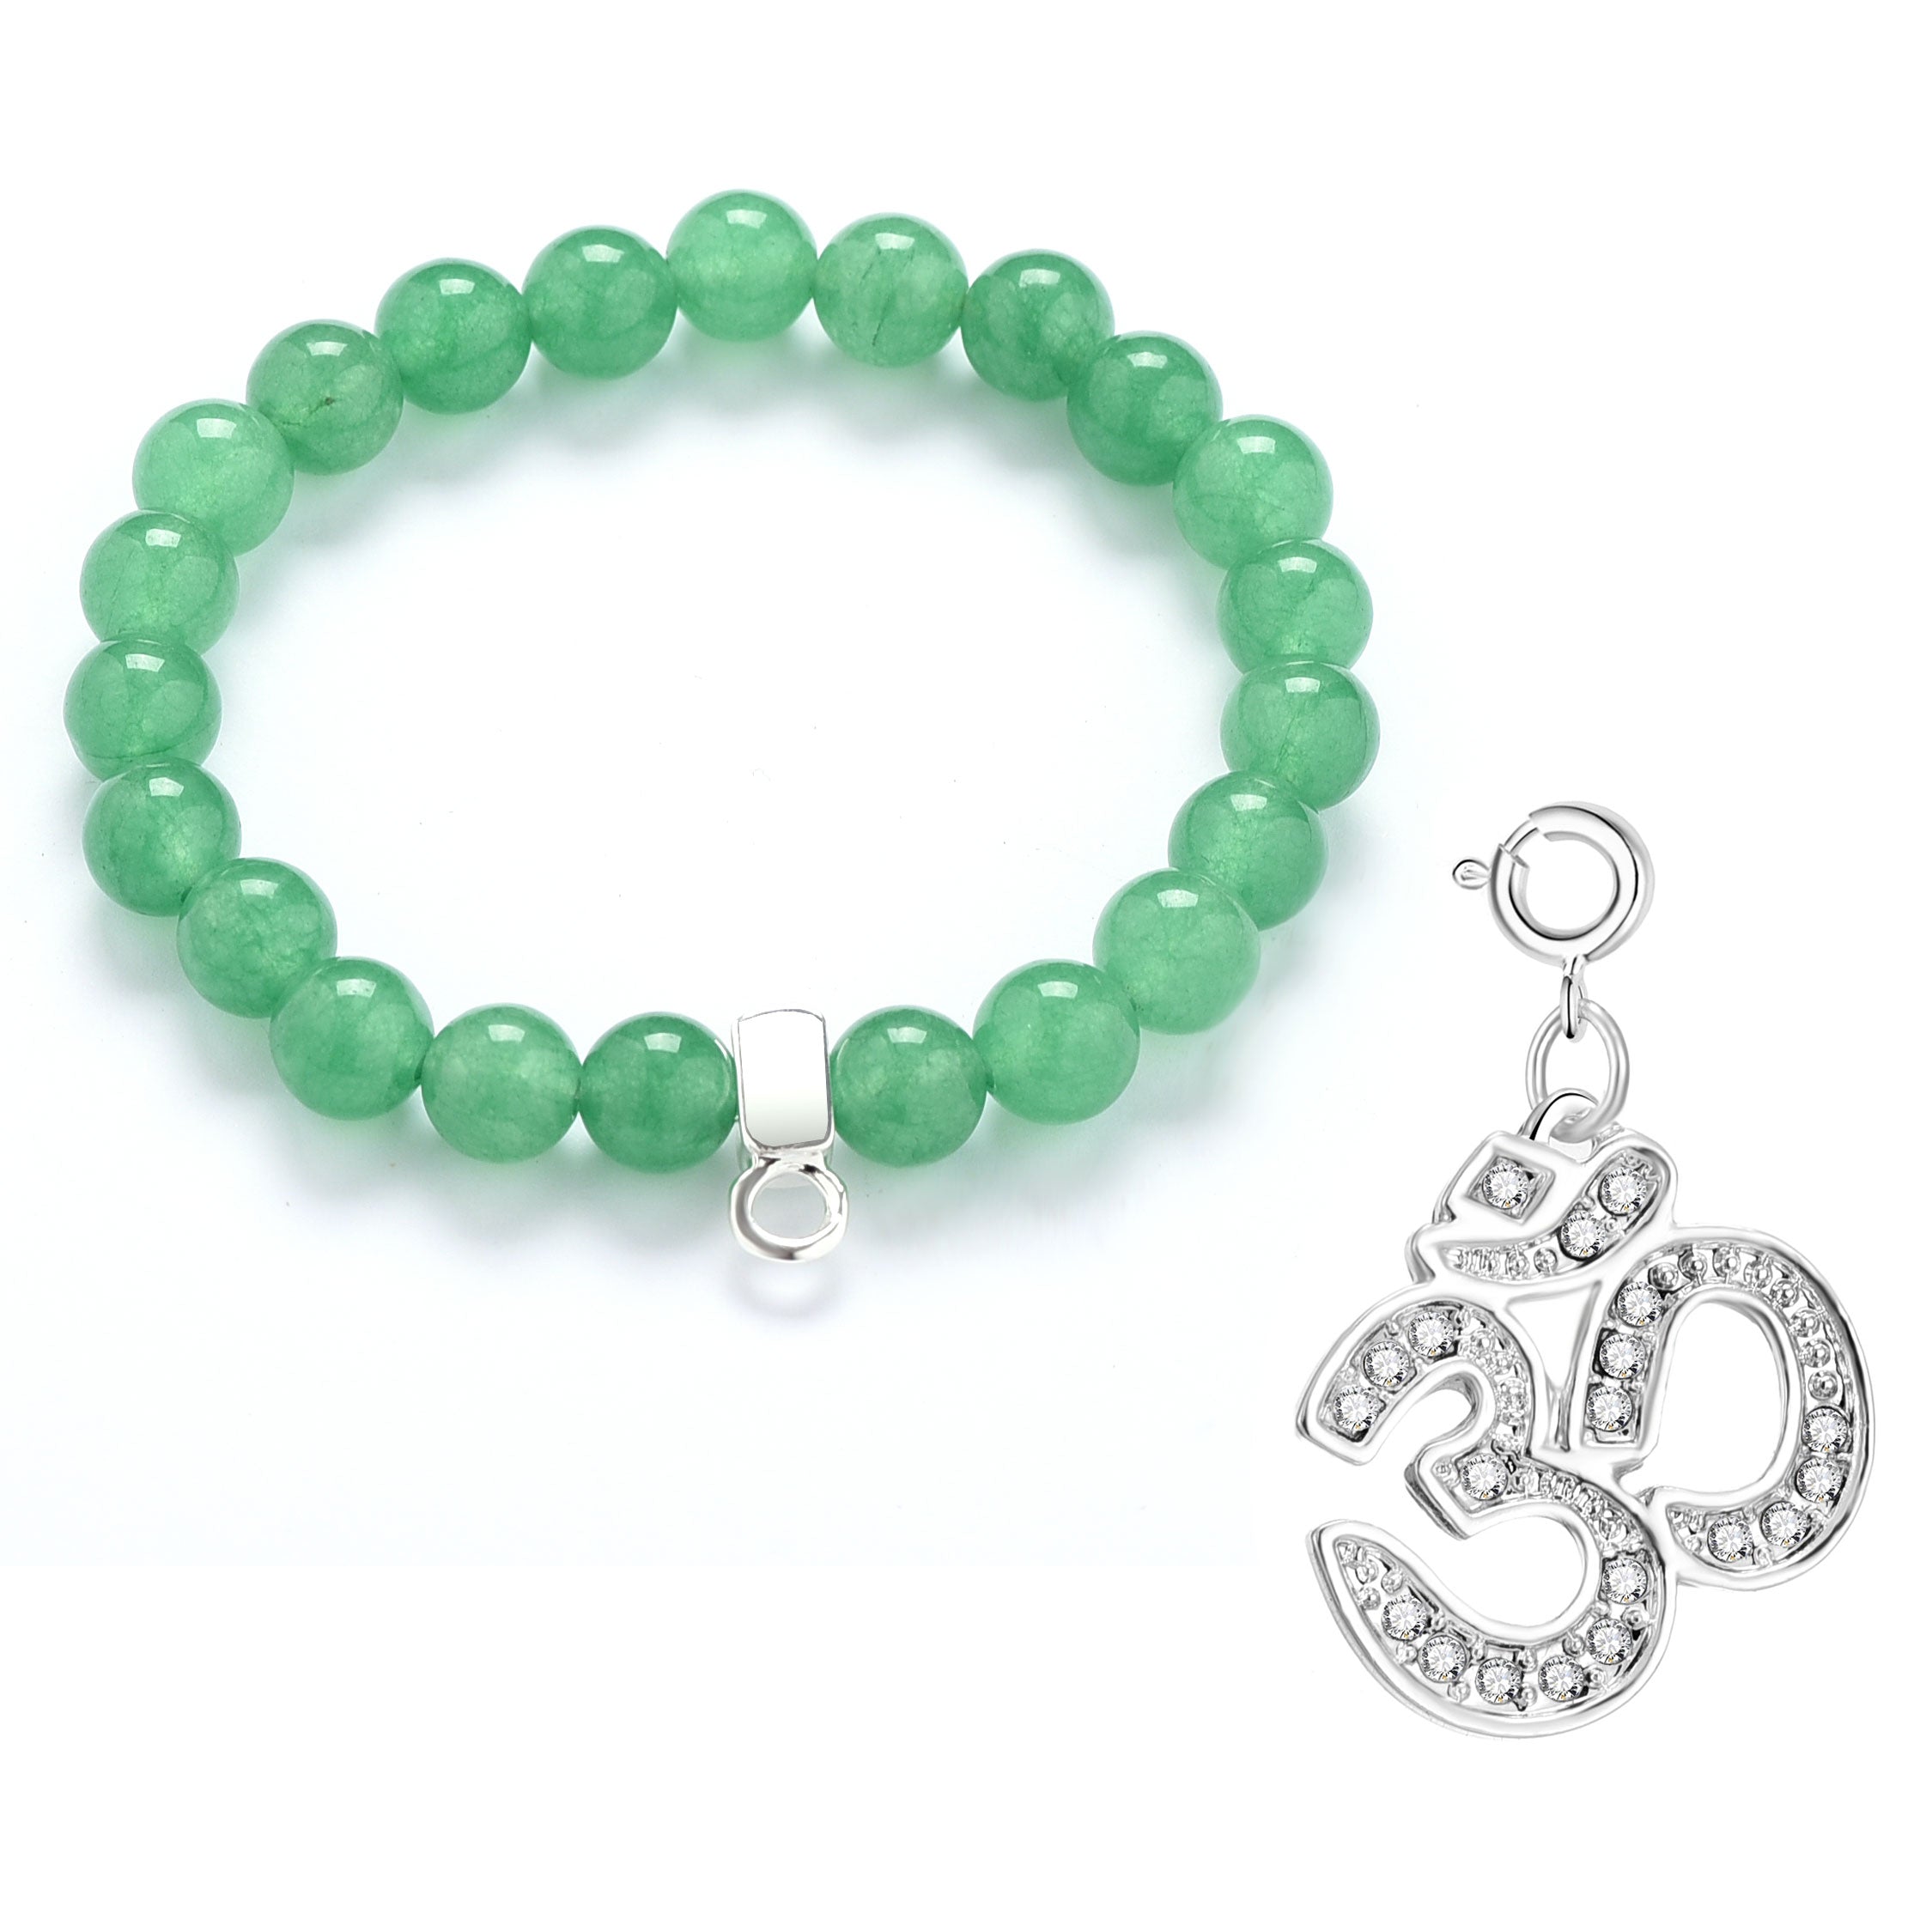 Green Aventurine Gemstone Bracelet with Charm Created with Zircondia® Crystals